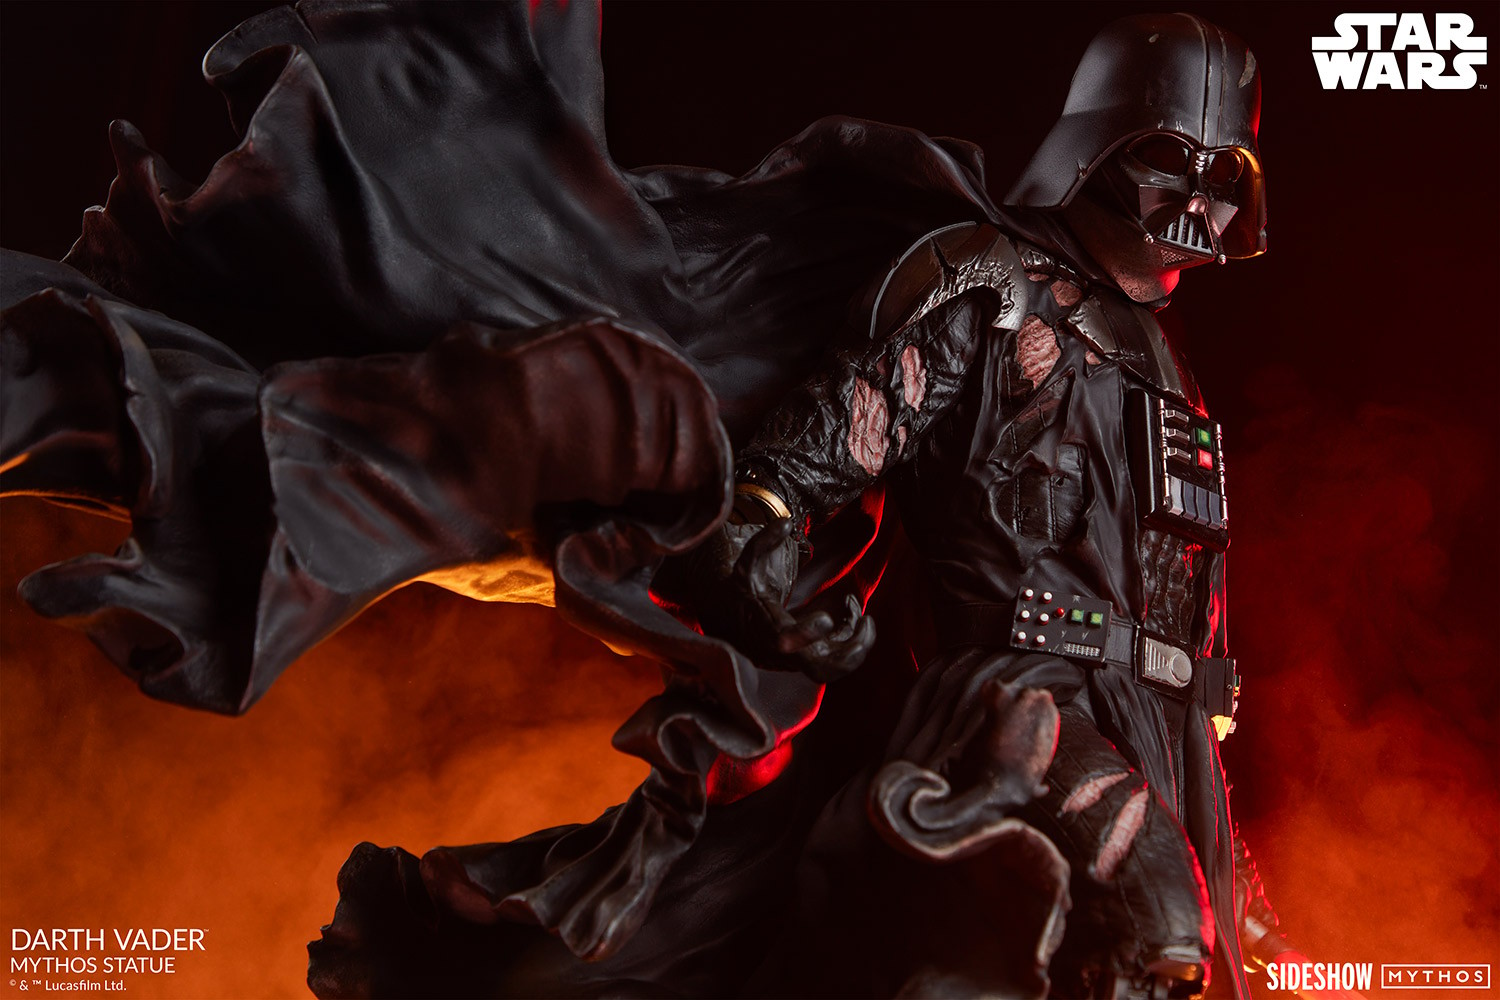 Darth Vader Mythos Exclusive Edition (Prototype Shown) View 30